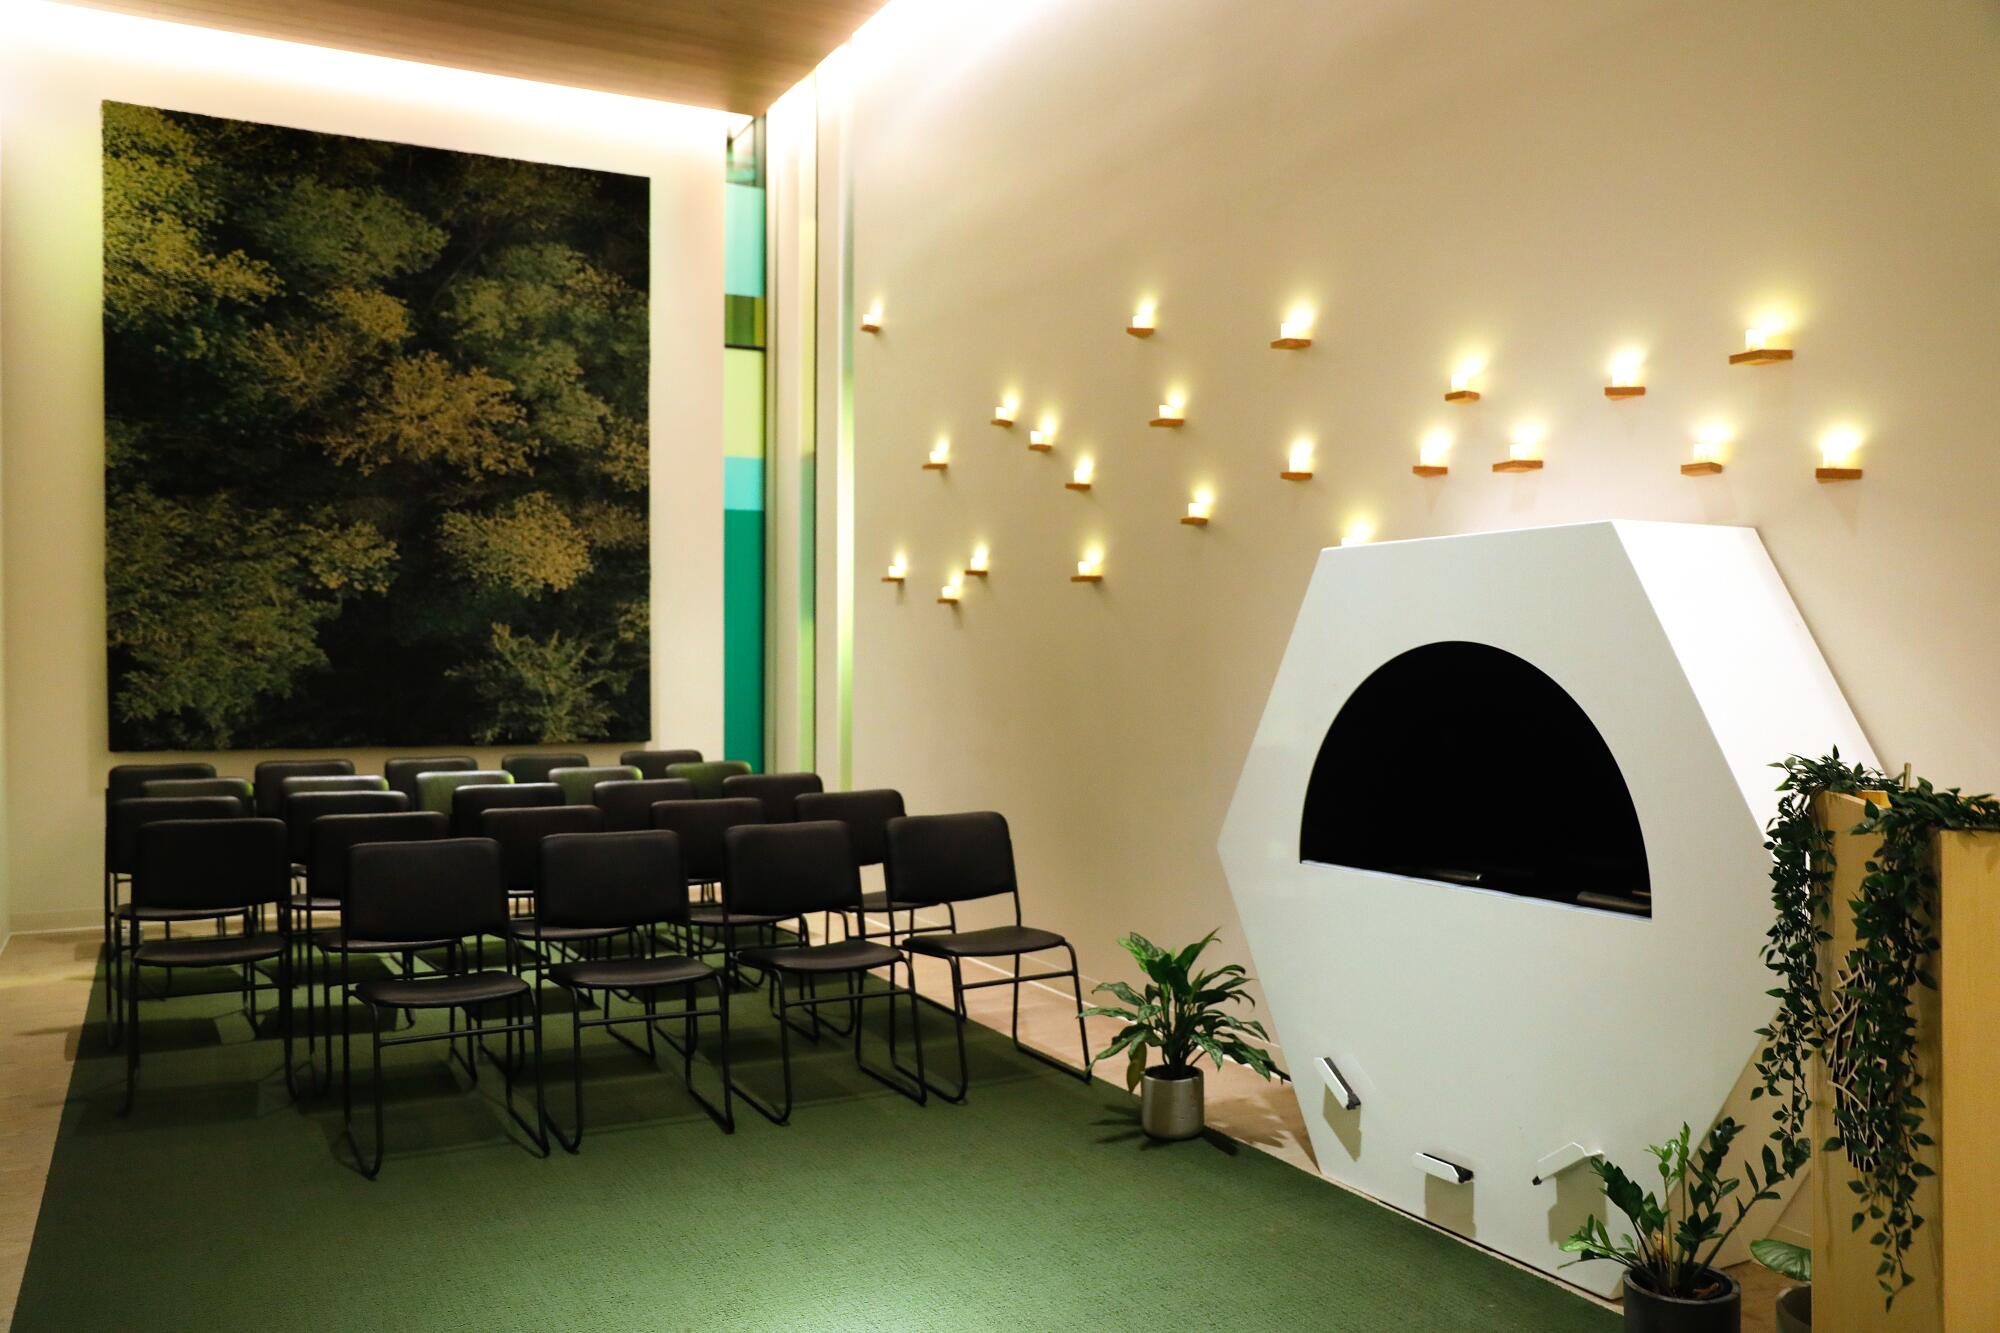 A white hexagonal pass-through vessel sits along a wall near folding chairs lined on a green carpet.